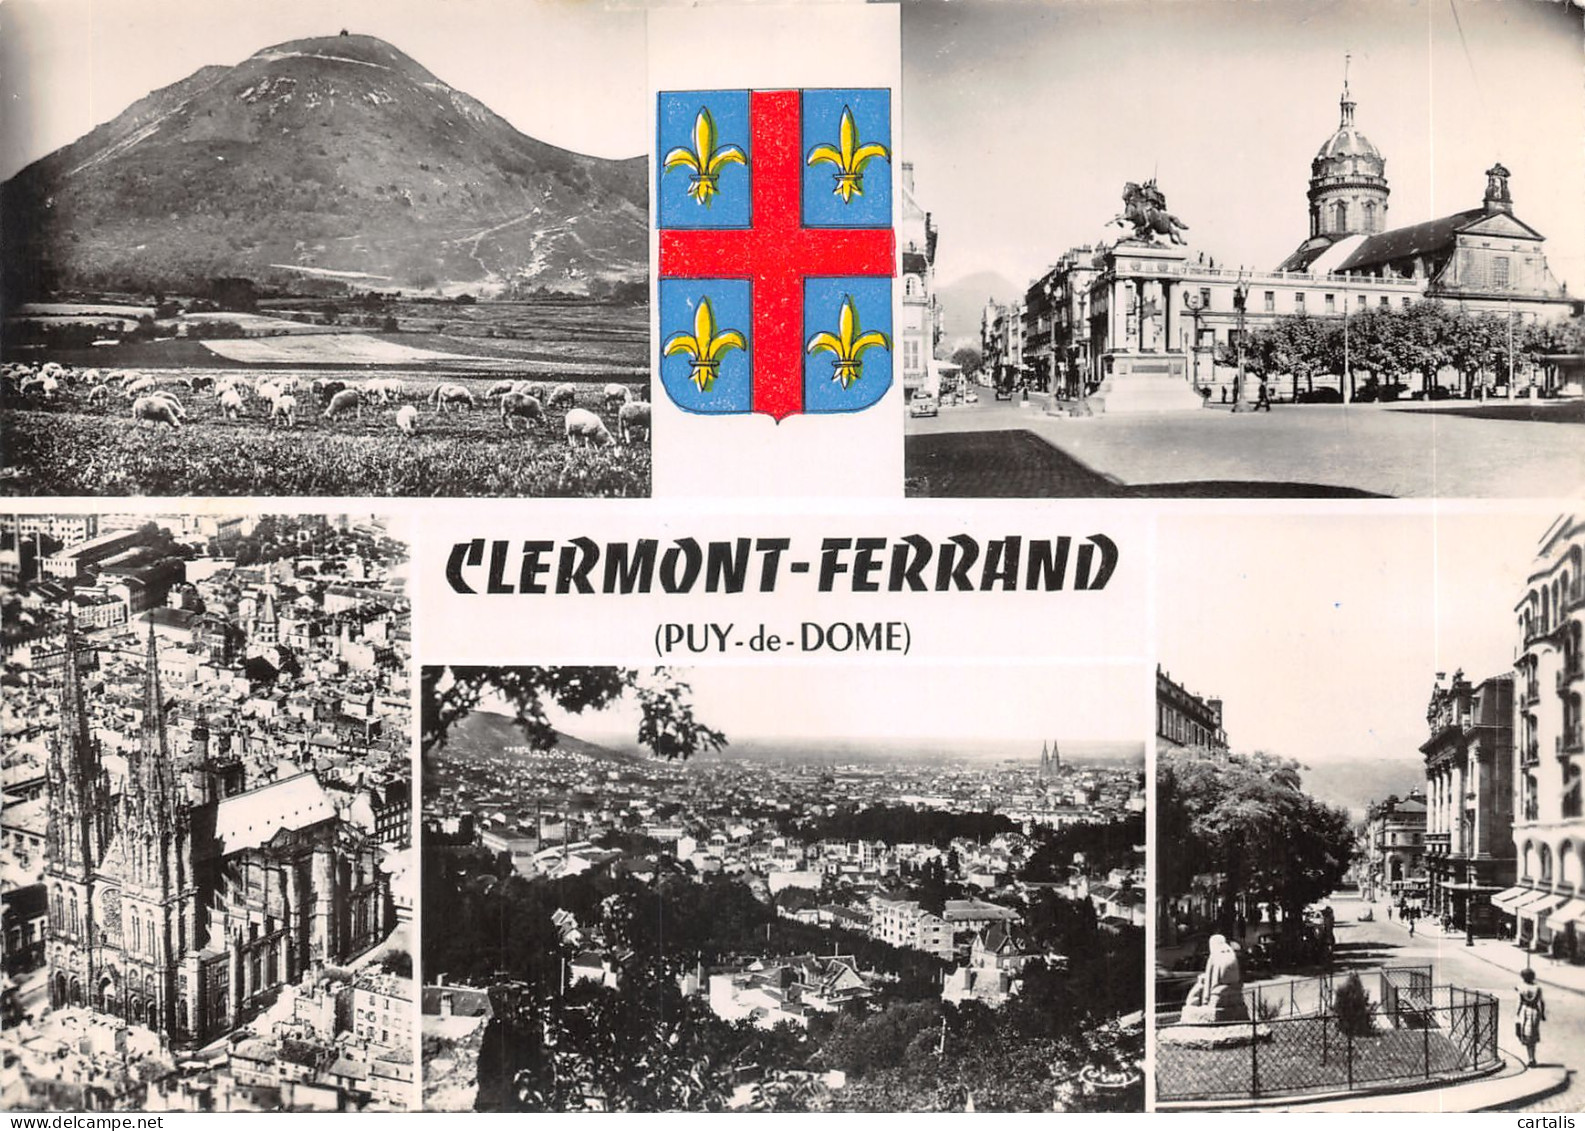 63-CLERMONT FERRAND-N 591-D/0073 - Clermont Ferrand